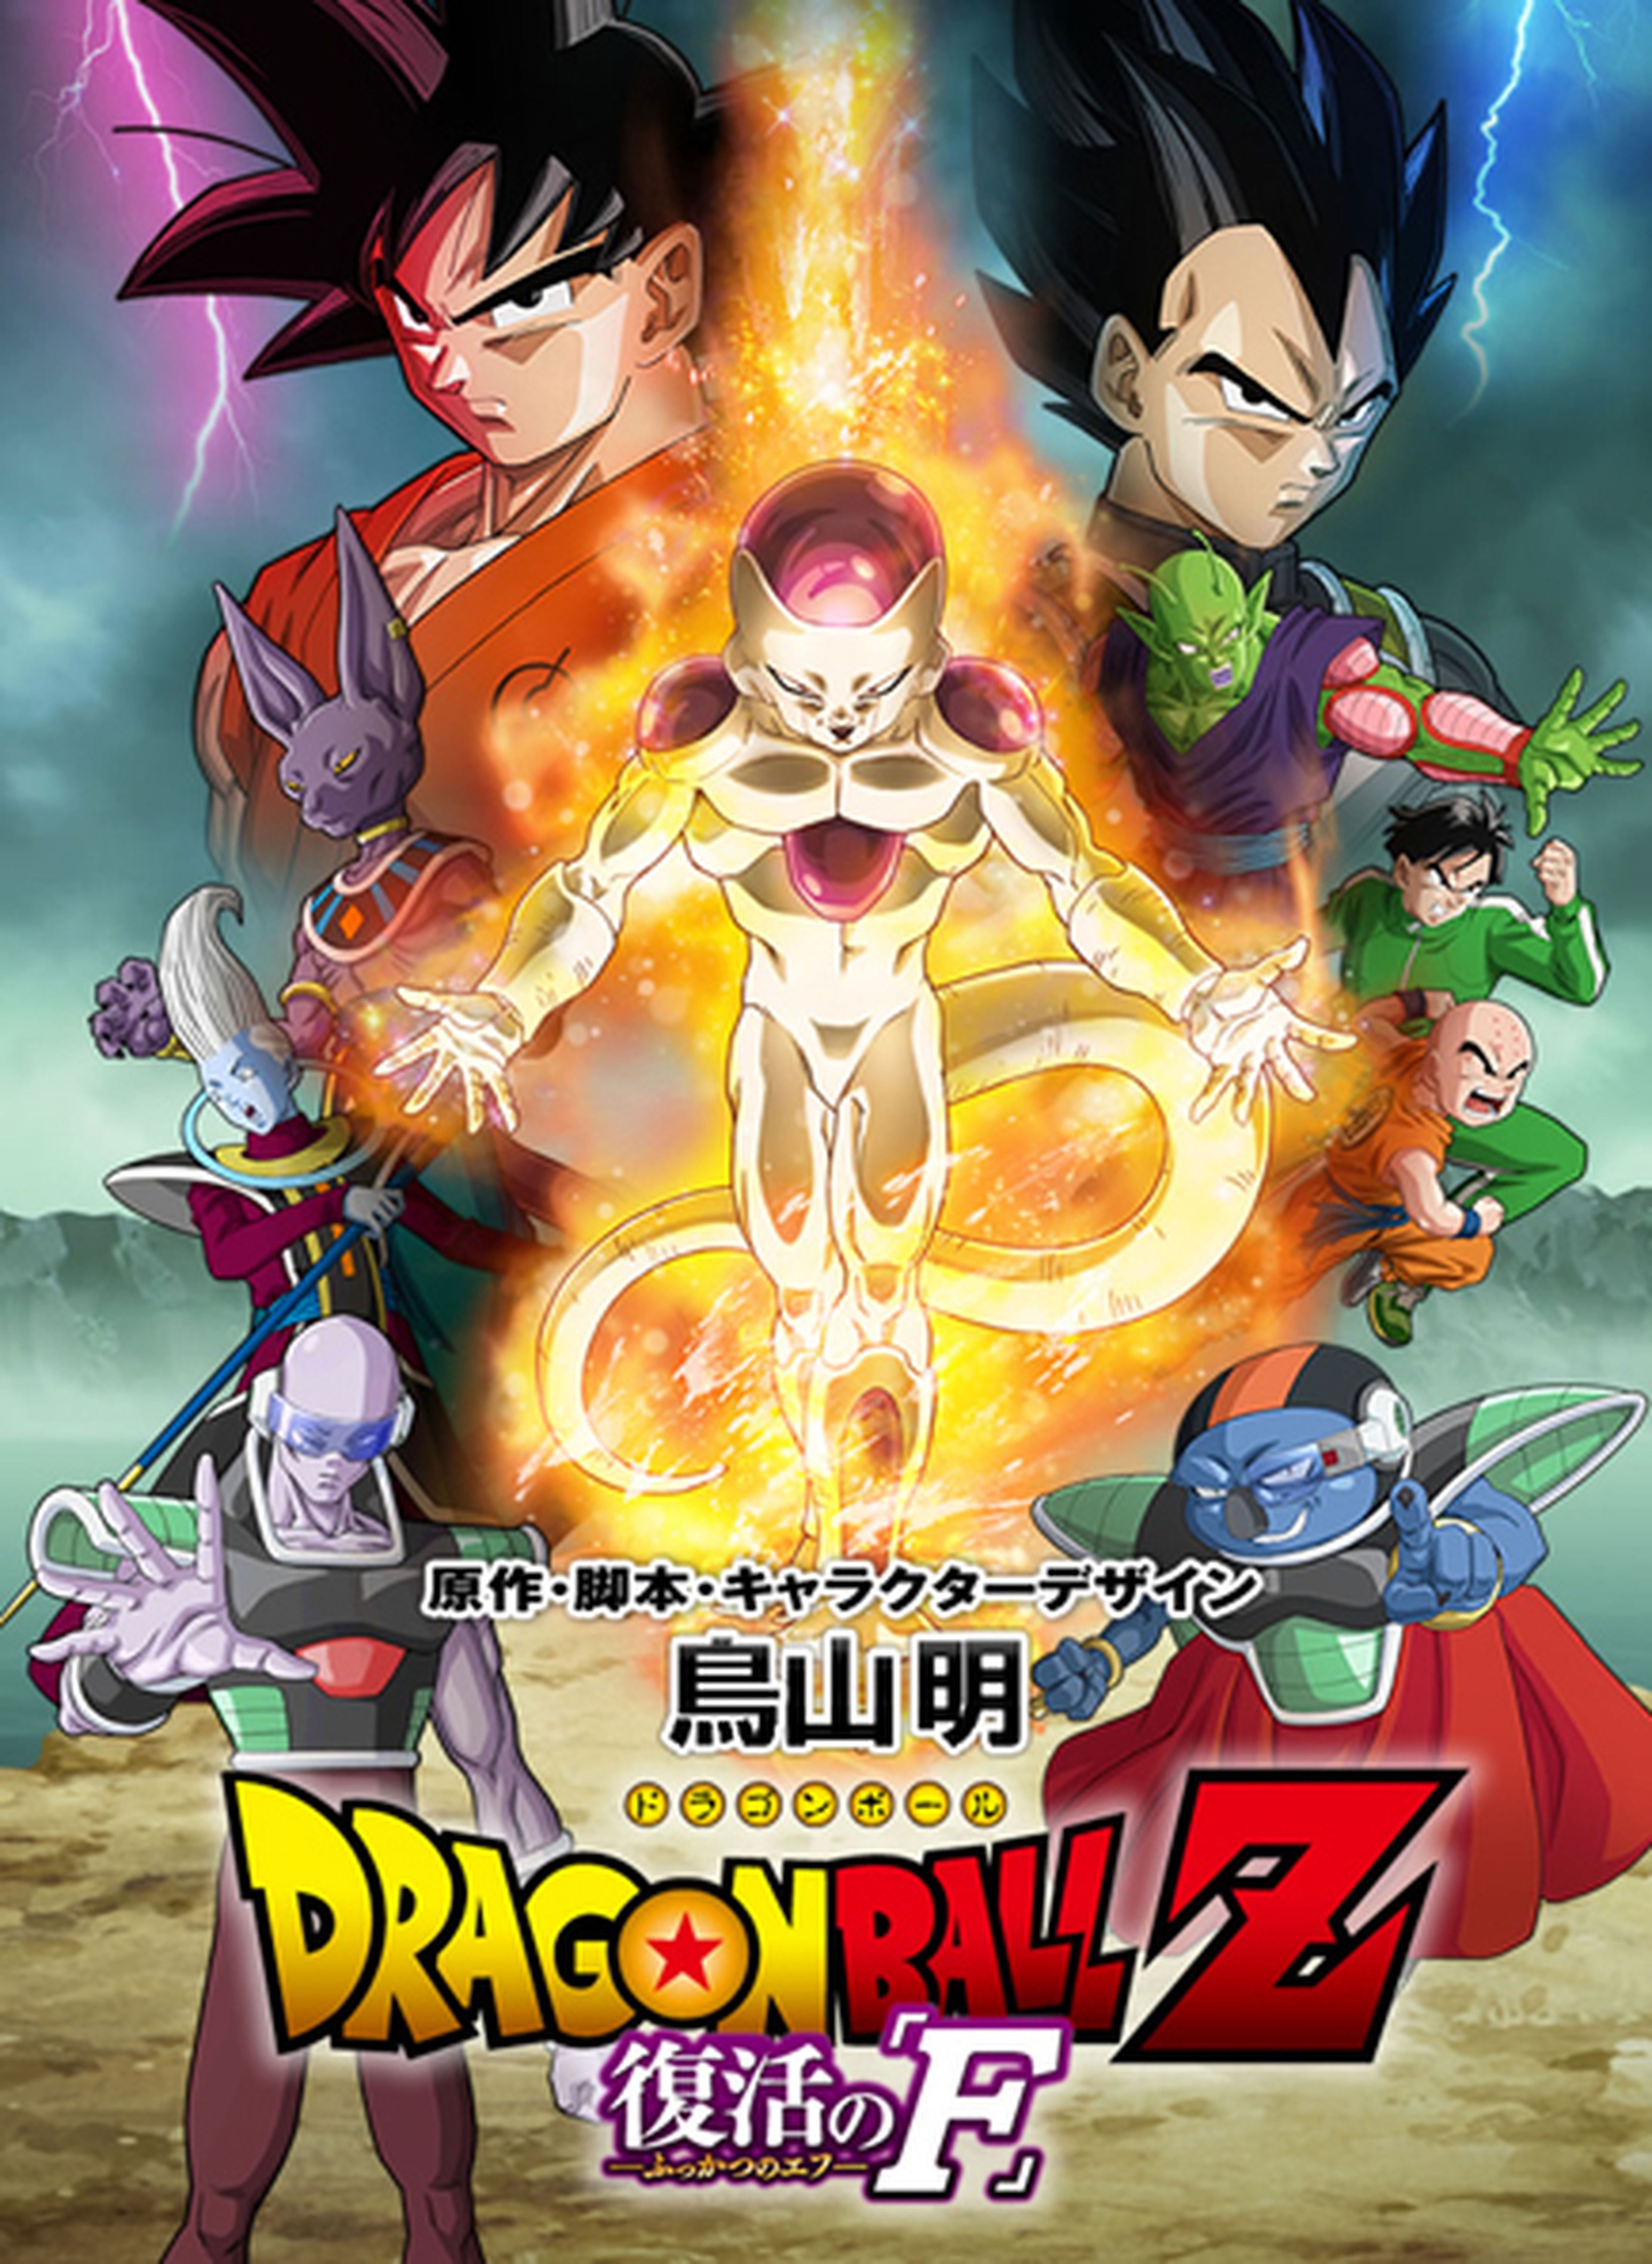 El tema de Dragon Ball Z: Fukkatsu no F interpretado por Momoiro Clover Z